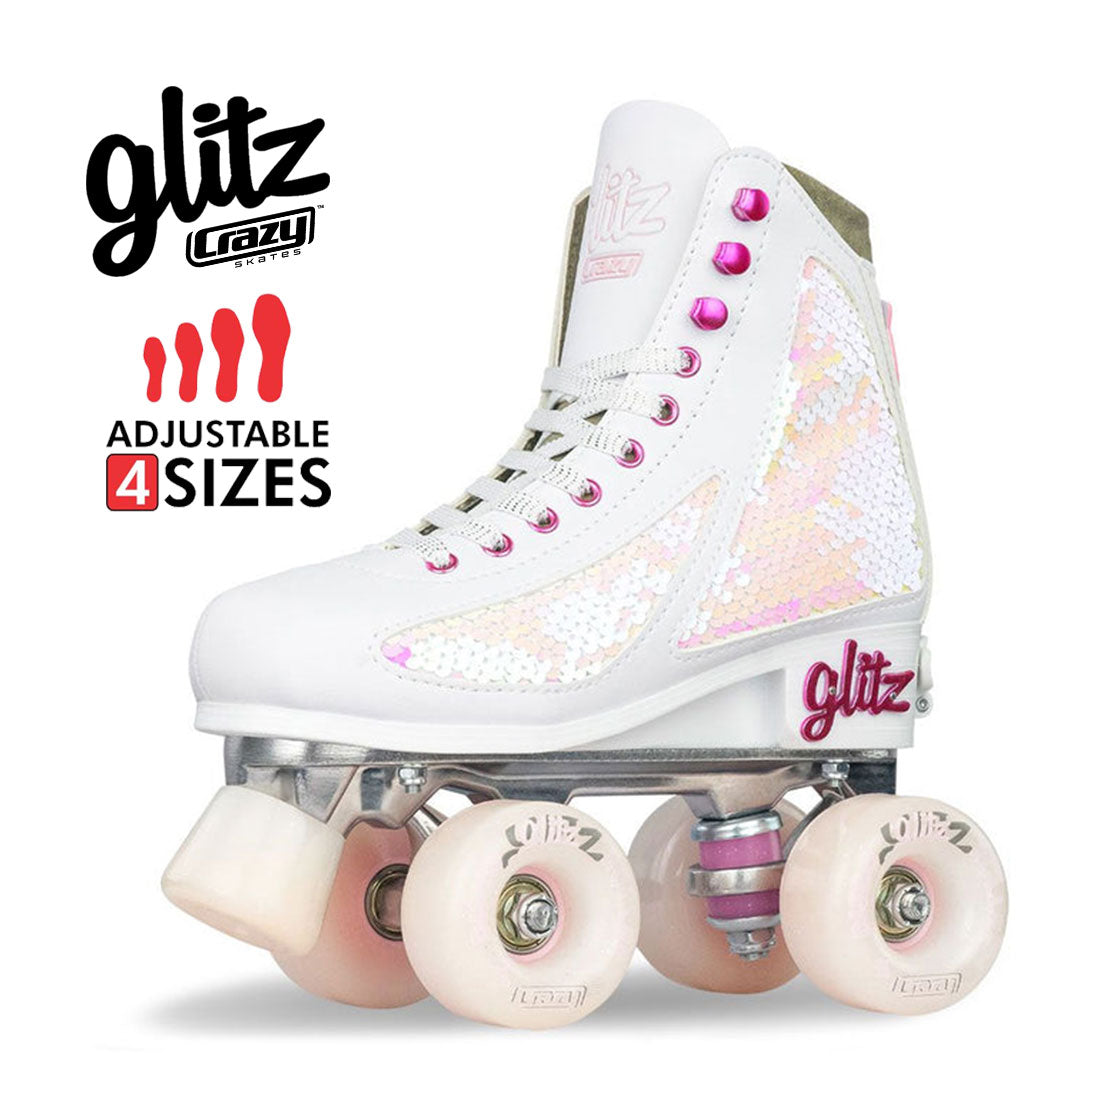 Crazy Disco Glitz Pearl - Kids Adjustable Roller Skates